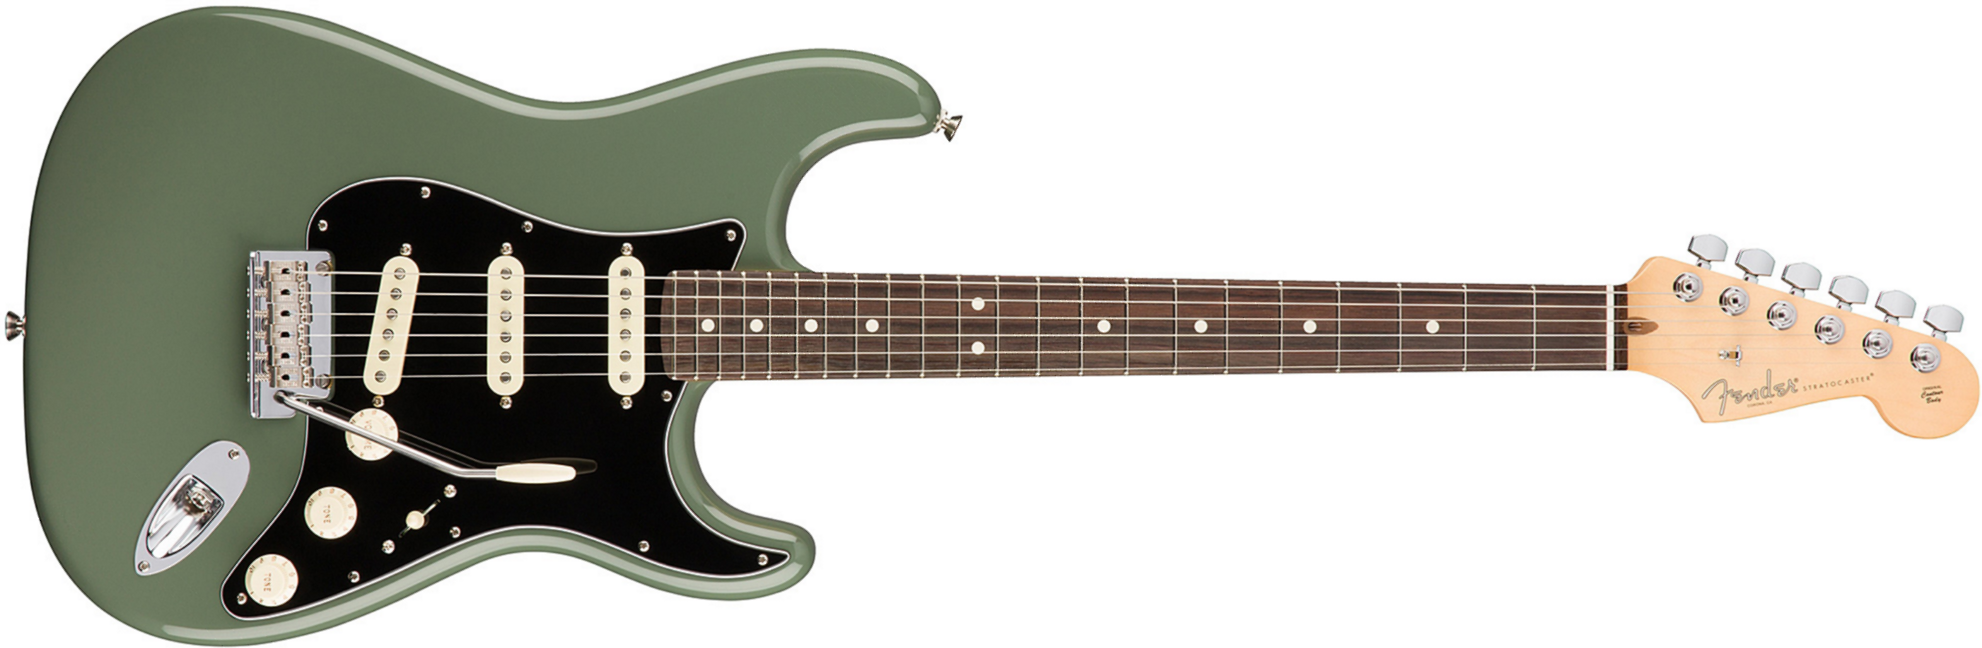 Fender Strat American Professional 2017 3s Usa Rw - Antique Olive - E-Gitarre in Str-Form - Main picture